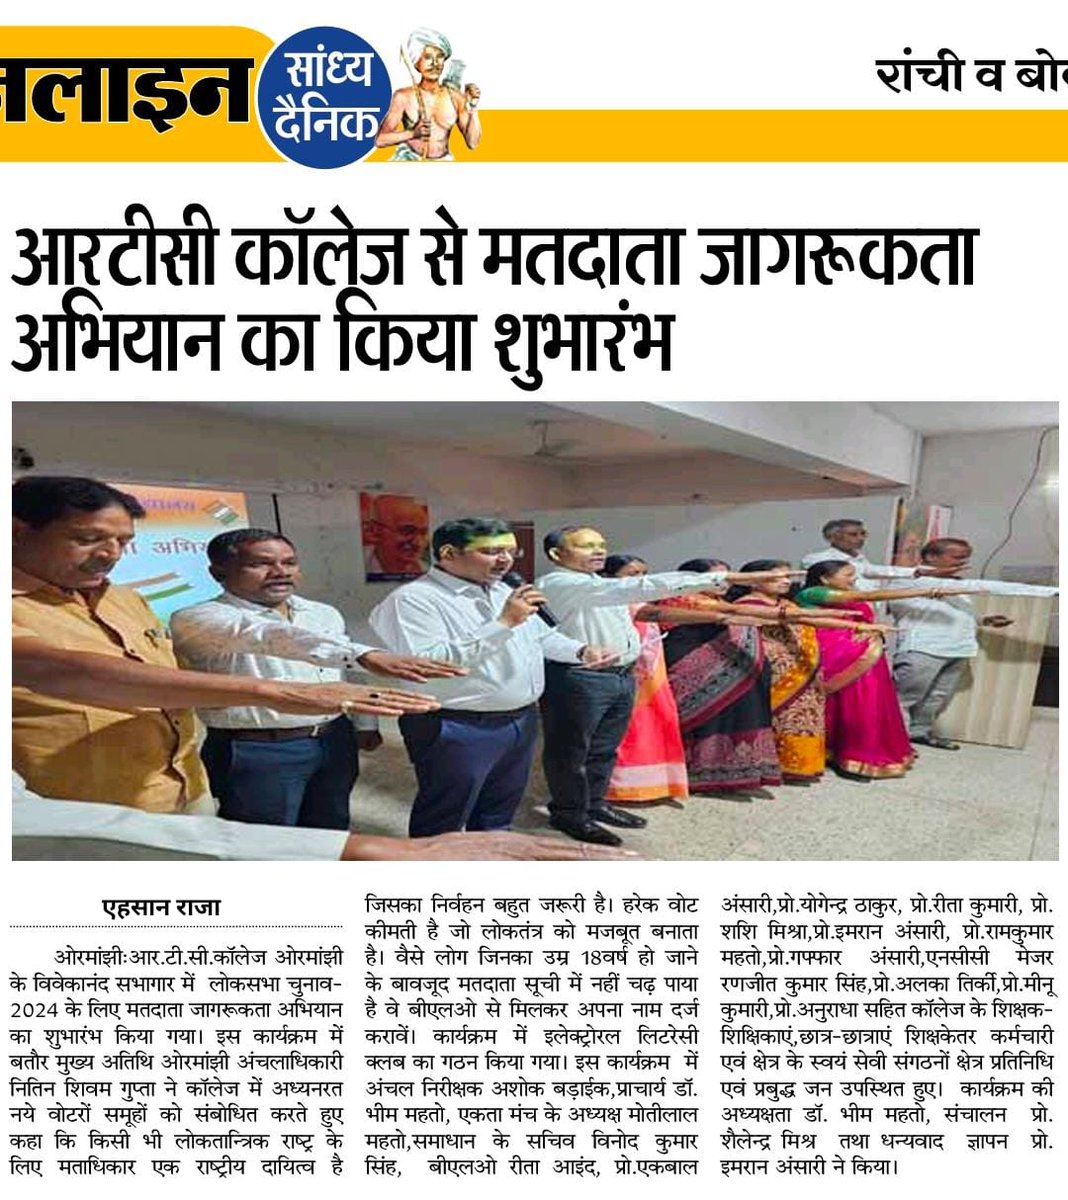 Media coverage of Voters awareness campaign celebrated by NSS volunteers of R.T.C College, Ormanjhi, Jharkhand
@_NSSIndia
@YASMinistry
@SportsJhr 
@pibyas
@ianuragthakur
@NisithPramanik
#YuvaBharat